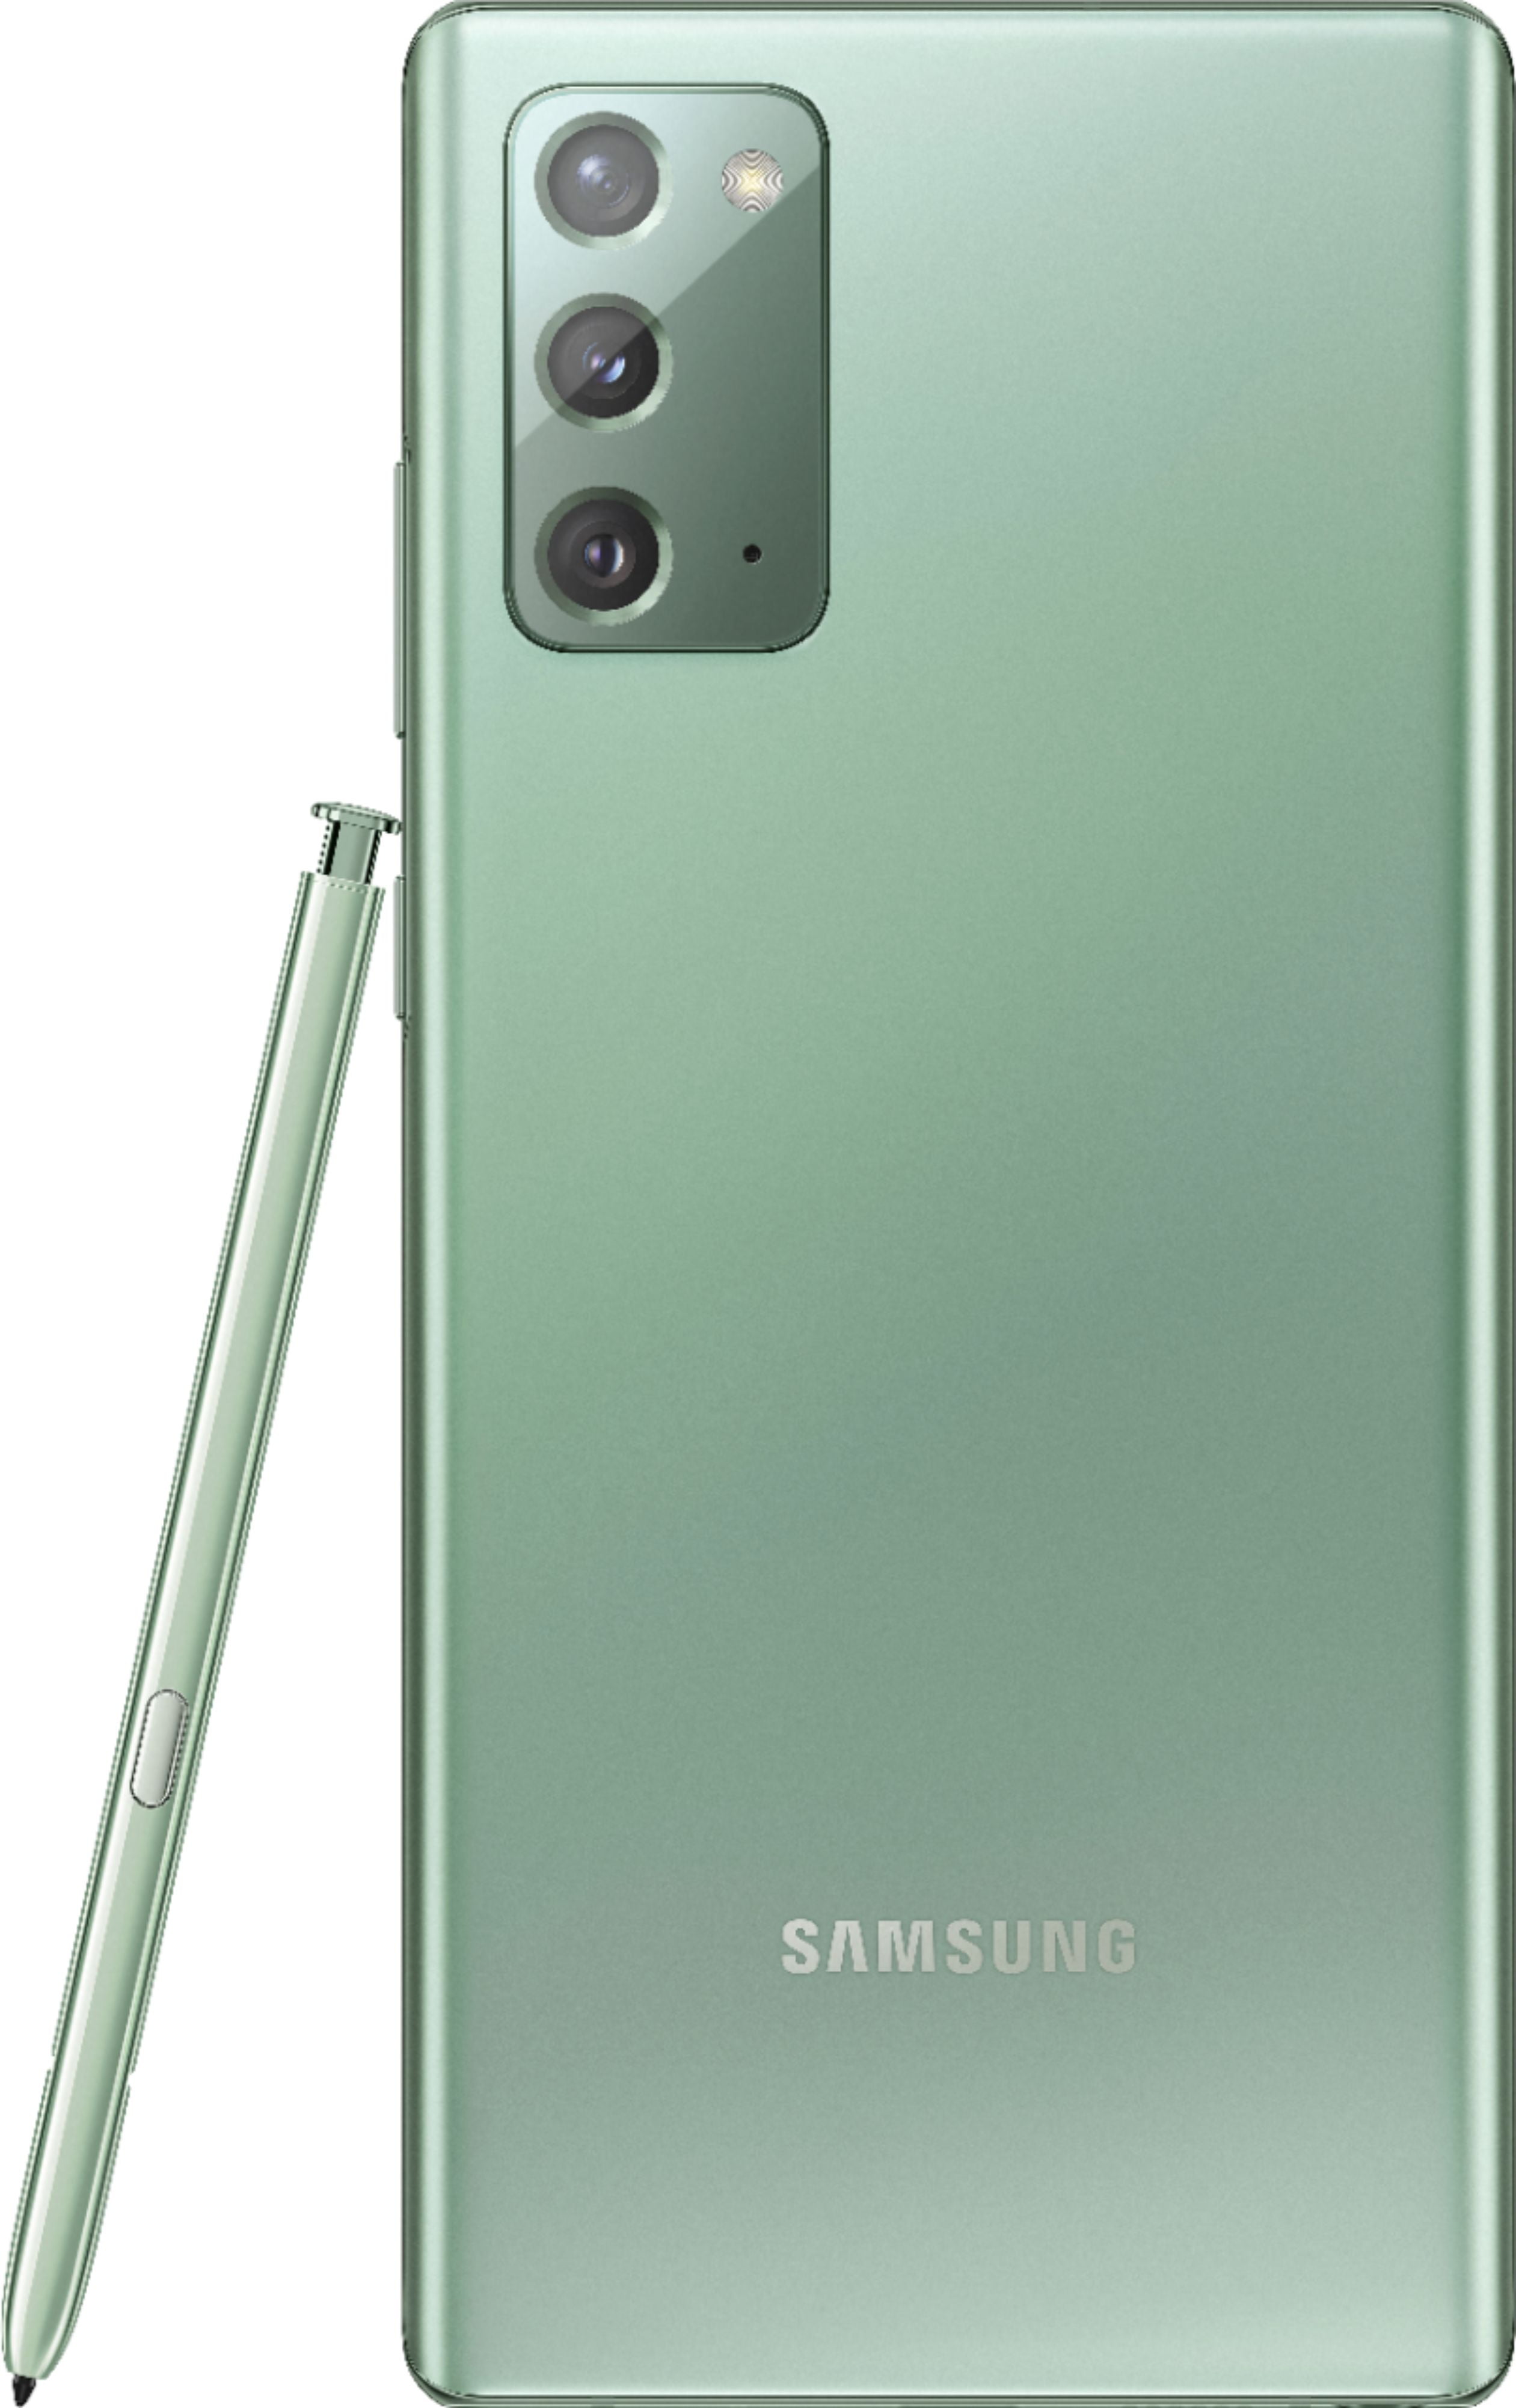 Samsung Galaxy Note 20 Ultra 5G Unlocked Phone, Mystic White